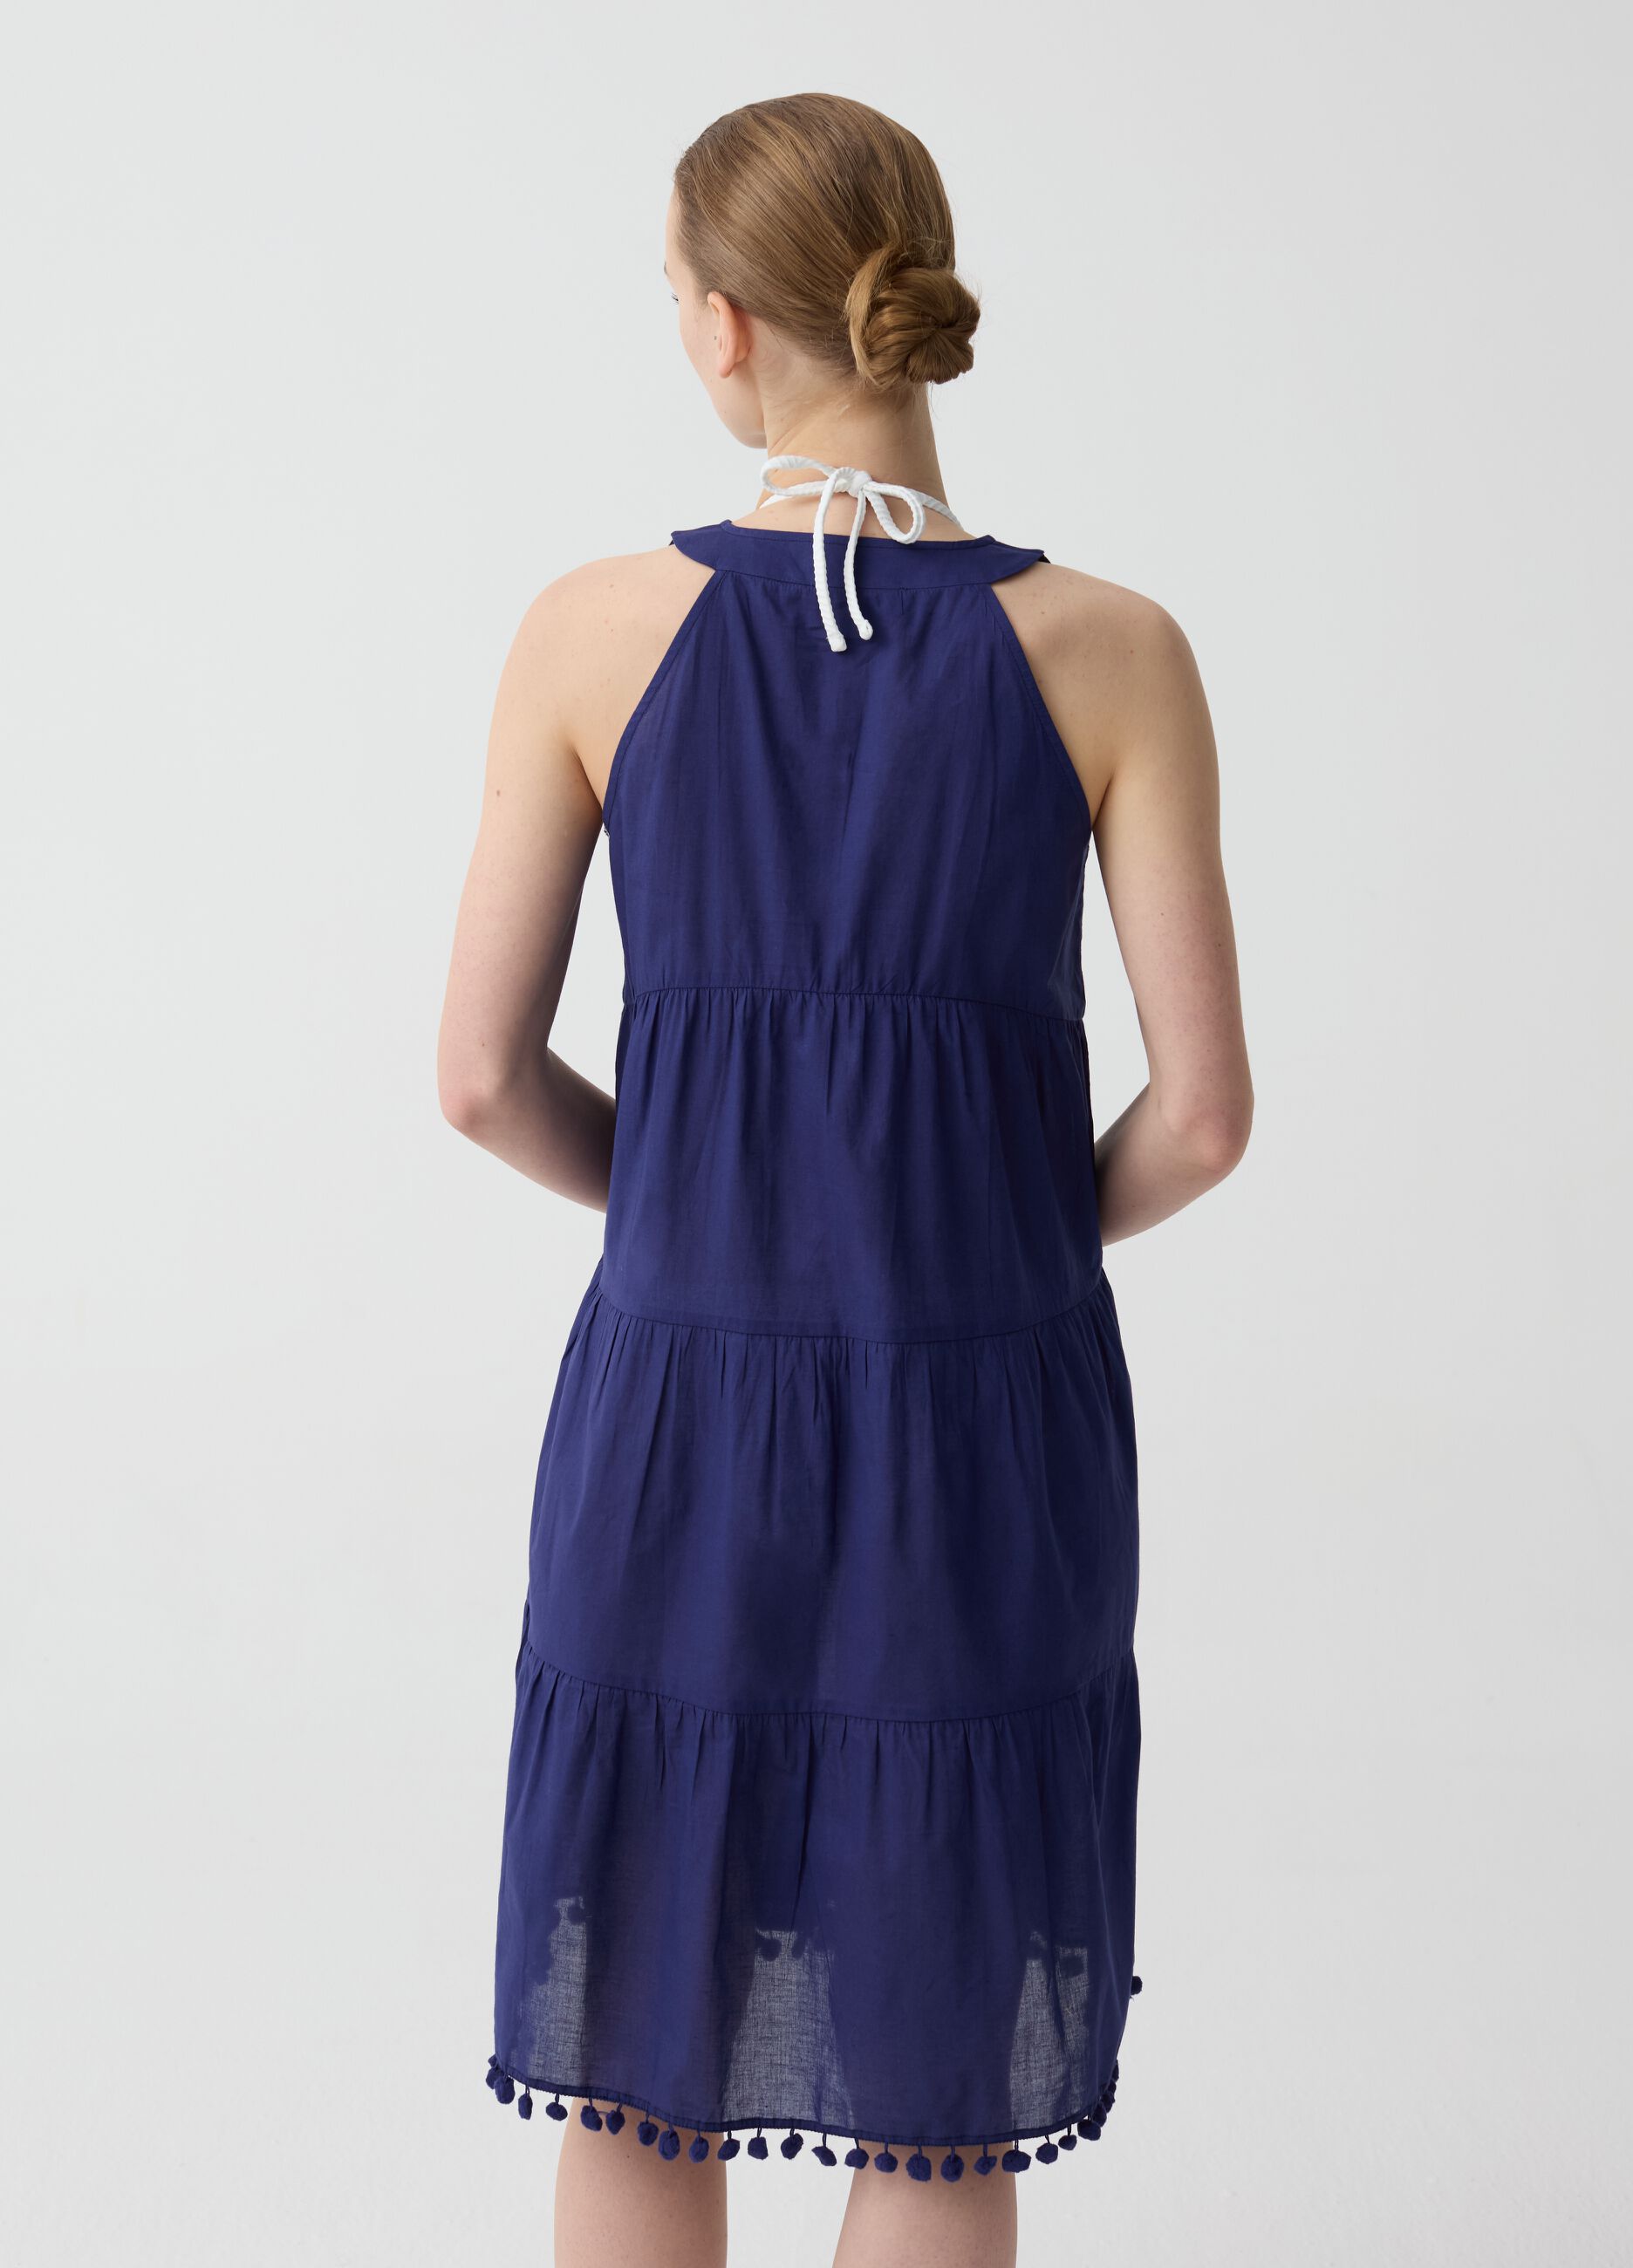 Positano summer dress with flounces